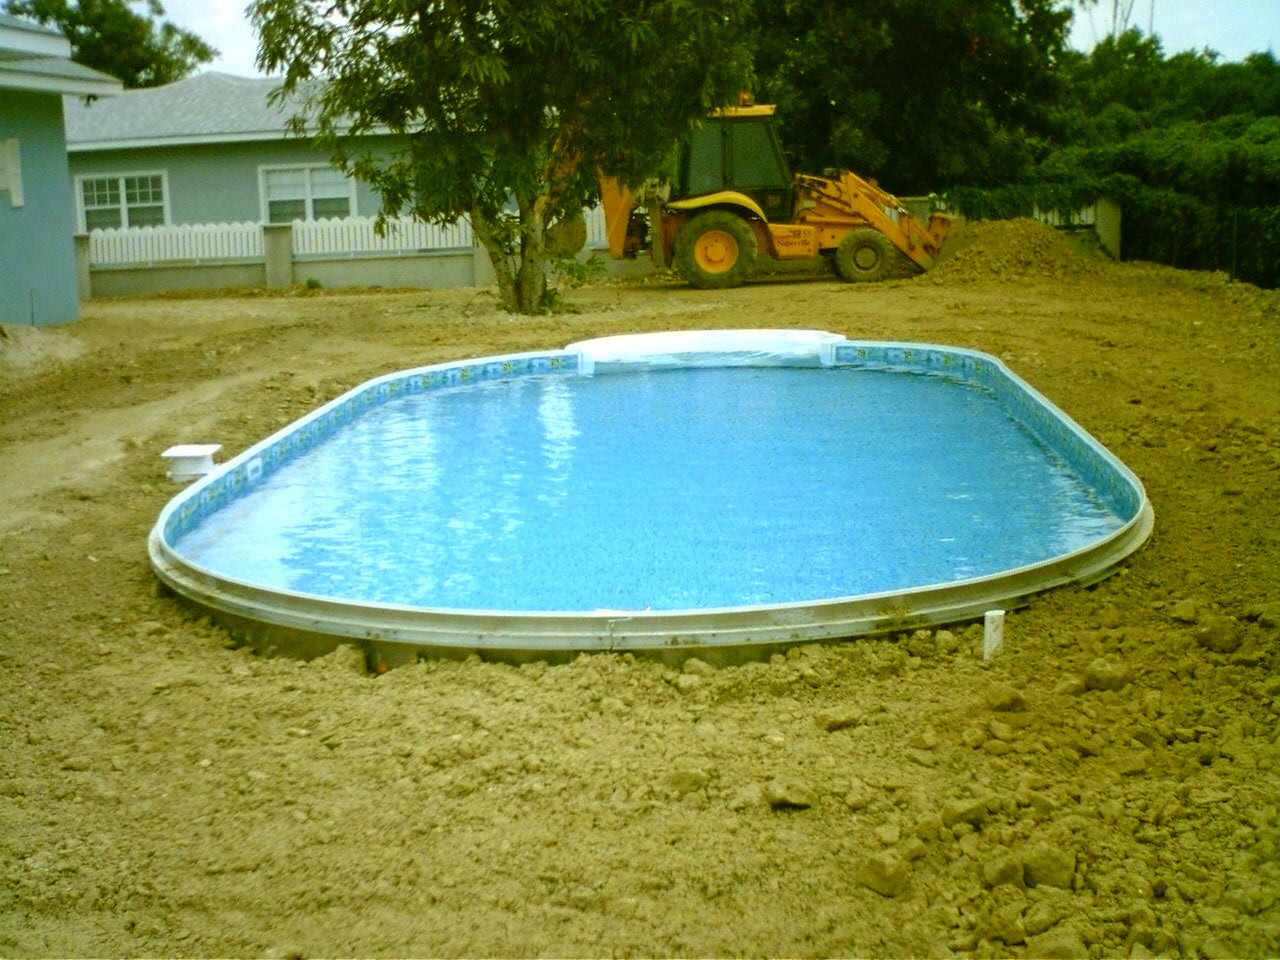 Best ideas about Fiberglass Inground Pool
. Save or Pin Awesome Fiberglass Inground Pools Now.